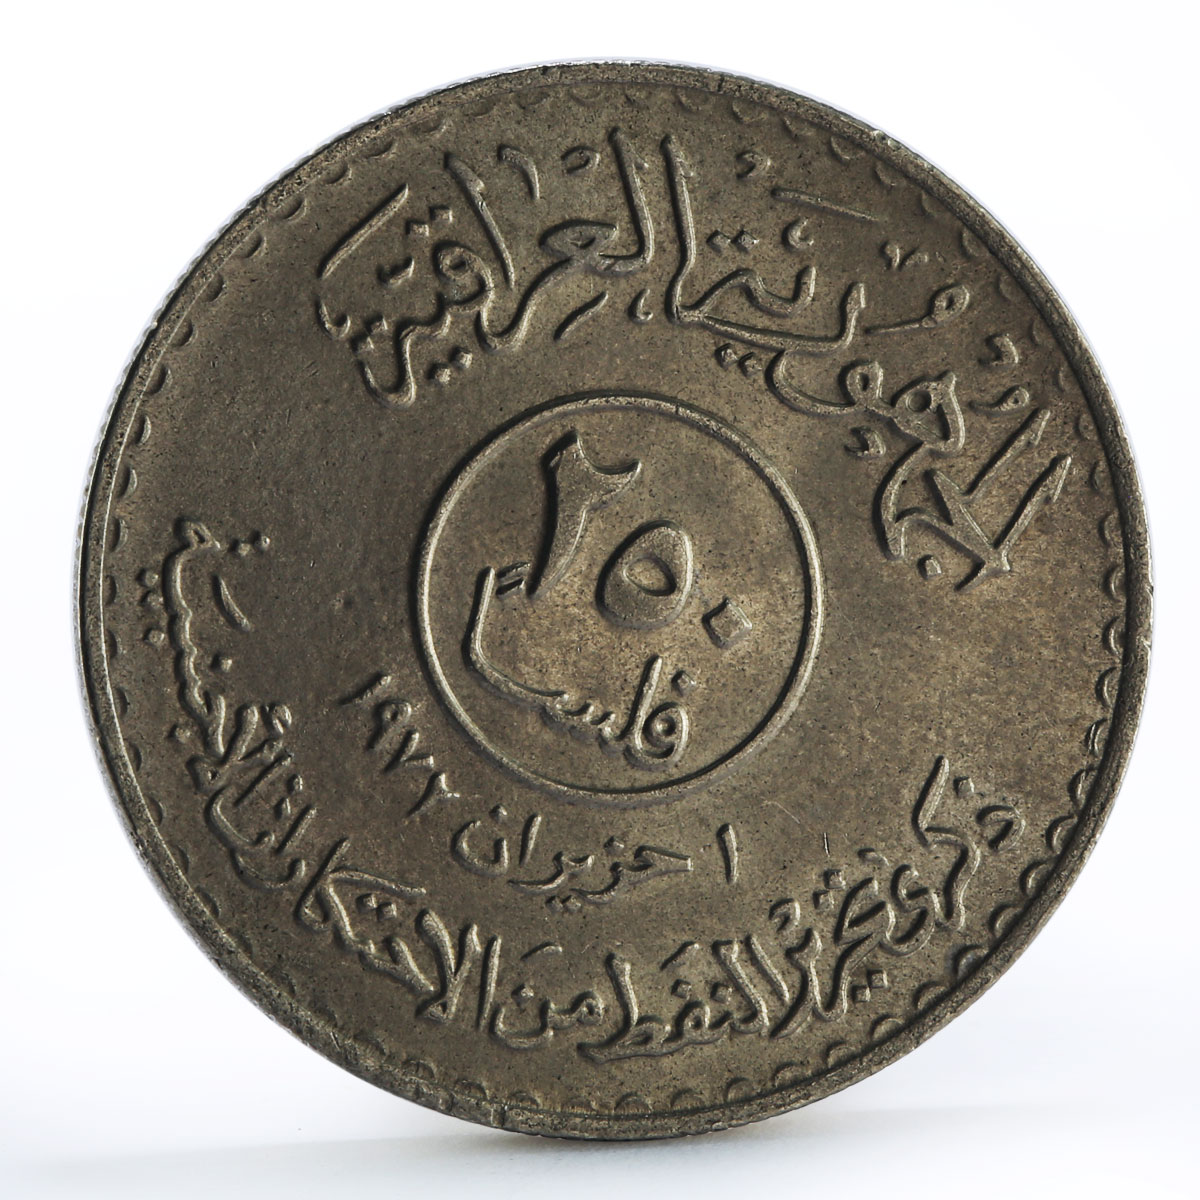 Iraq 250 fils Oil Nationalization Torch Refinery Plant nickel coin 1973